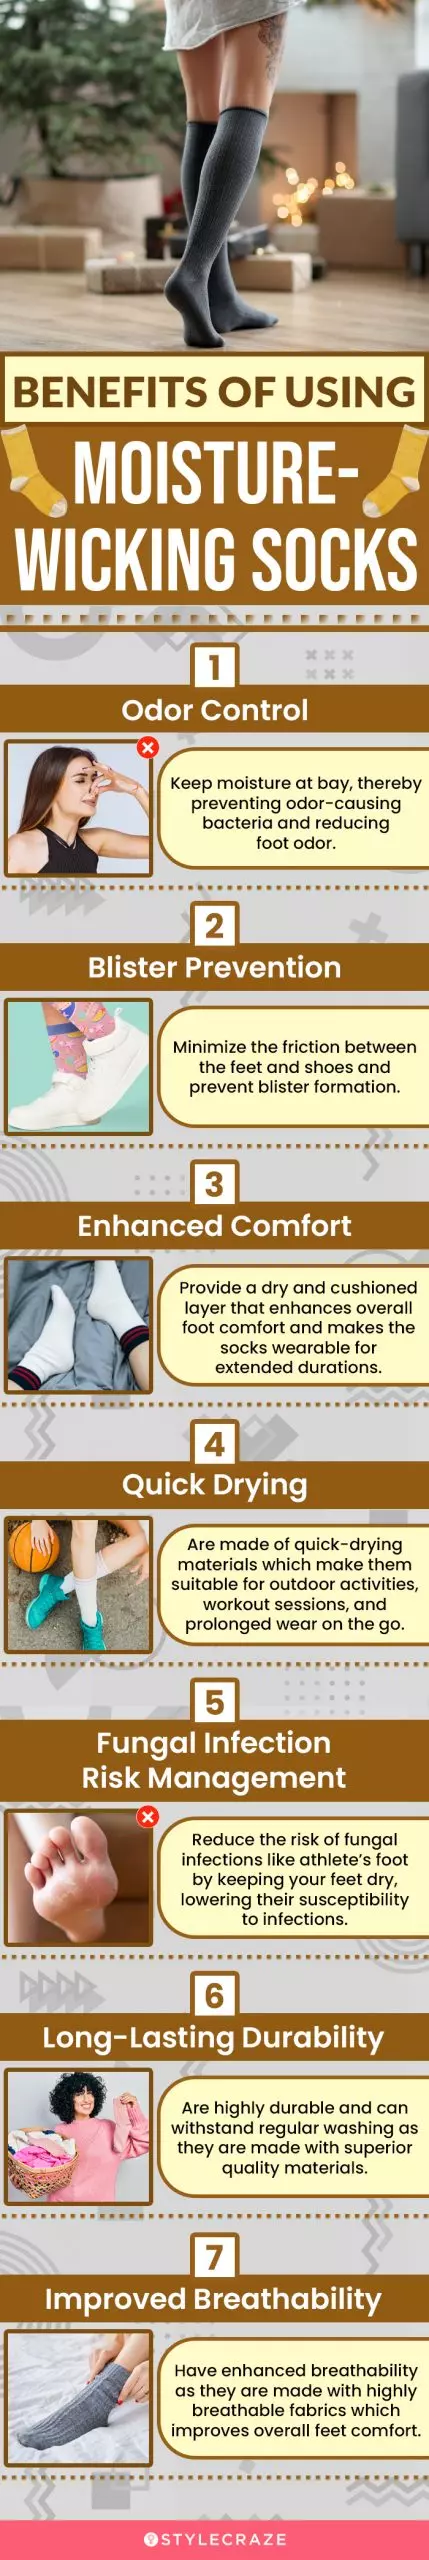 Benefits Of Using Moisture Wicking Socks (infographic)